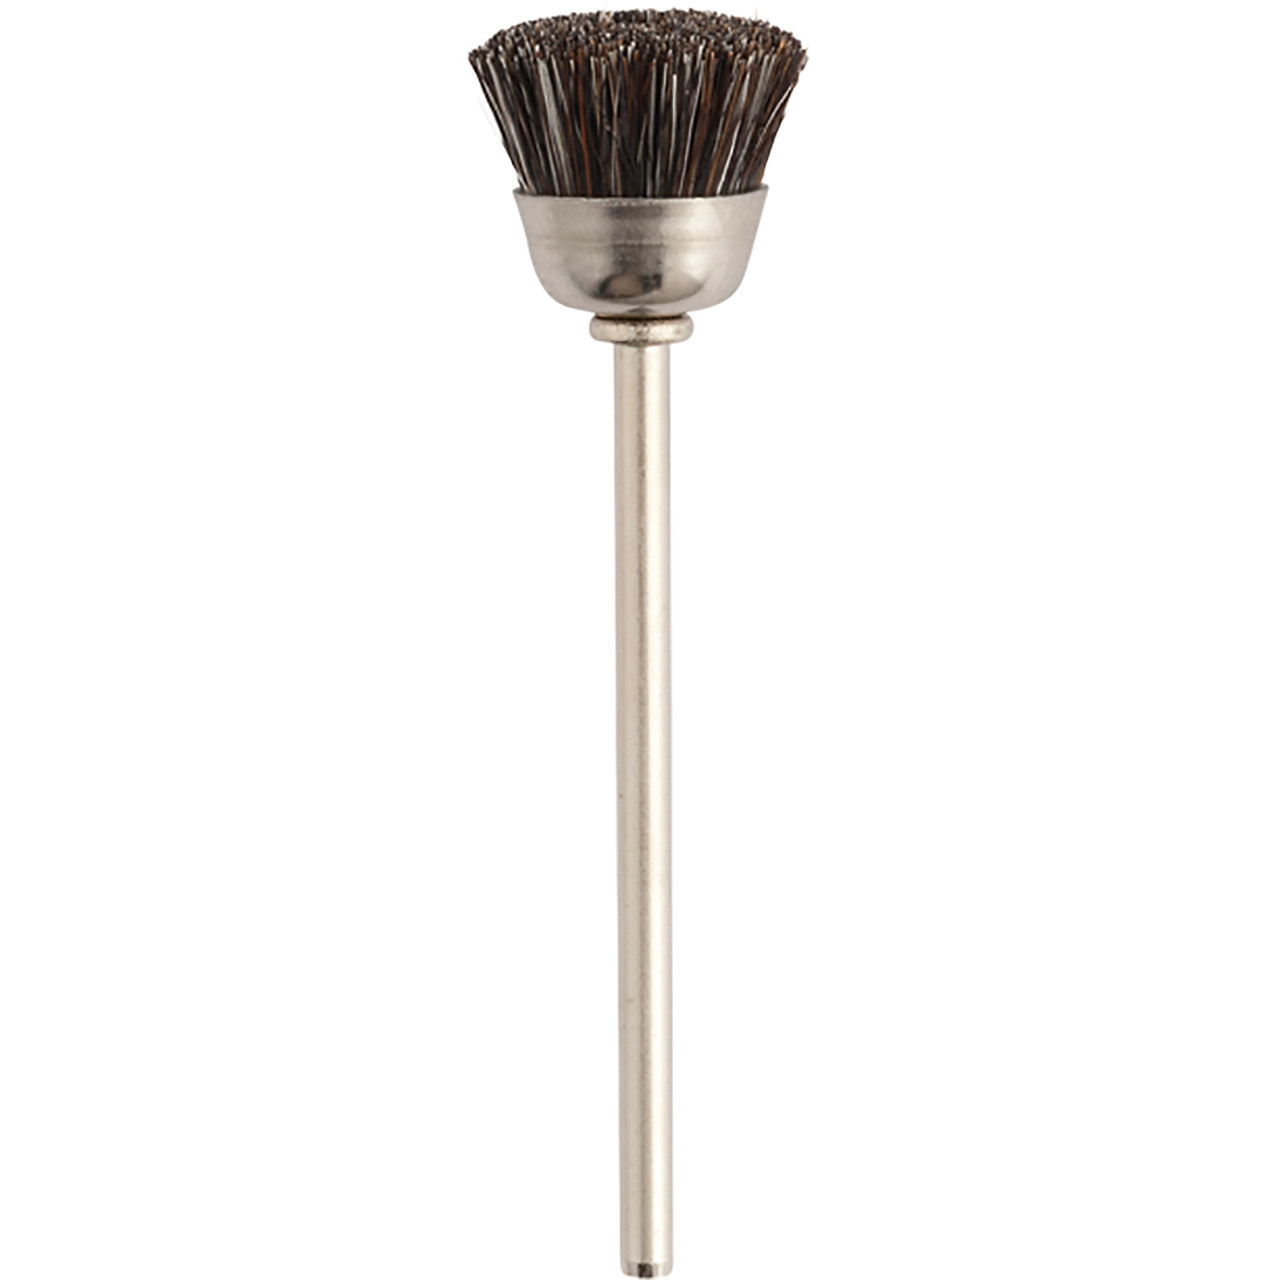 SUPRA® "MM" #751 Soft Bristle Cup Brushes 3/32" Shank (Pkg. of 12)